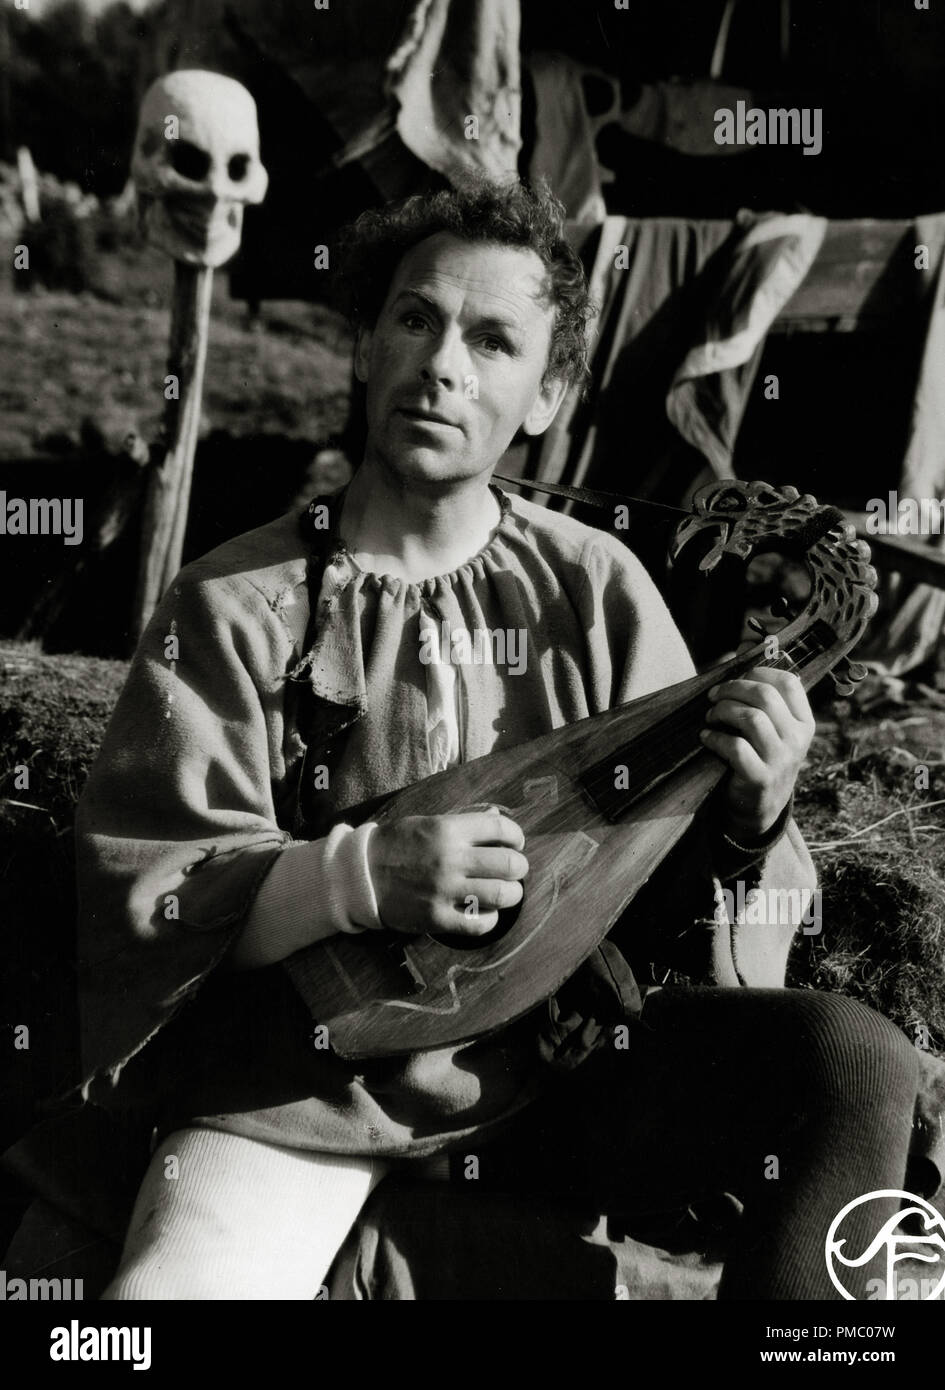 'El séptimo sello' (1957) AB Svensk Filmindustri, dirigida por Ingmar Bergman, Referencia de archivo # 33480 880tha Foto de stock